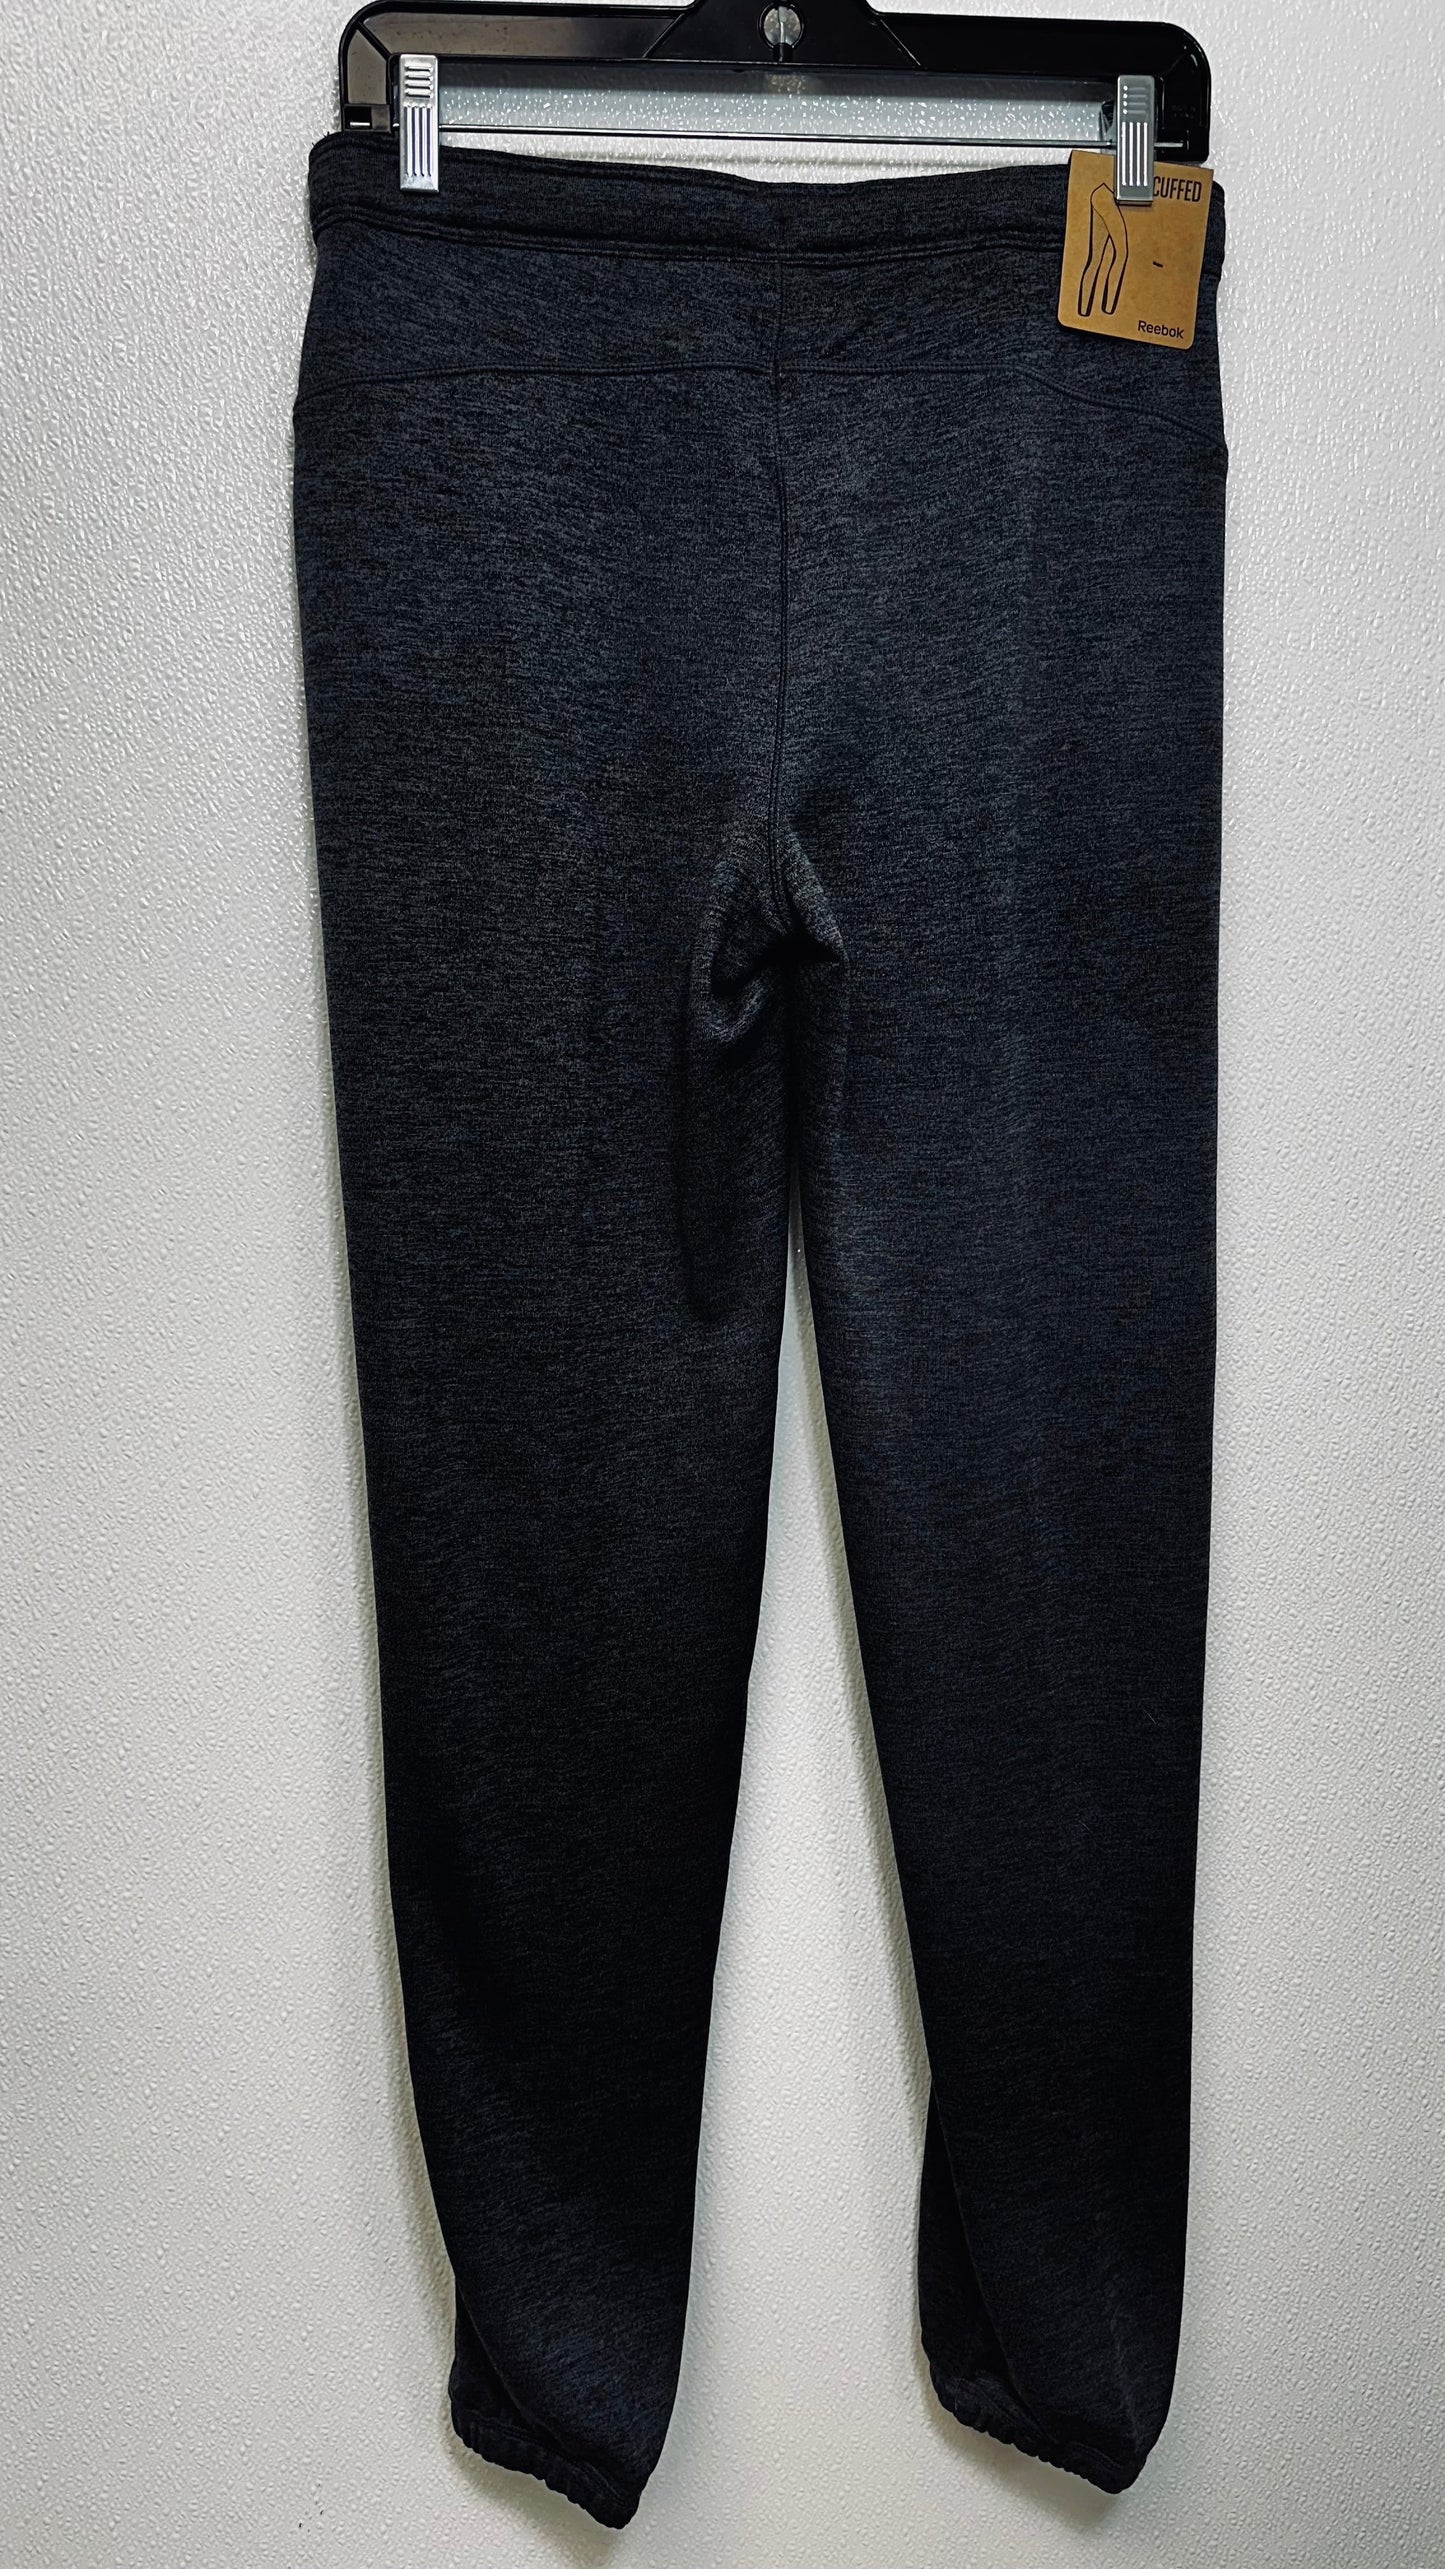 Charcoal Athletic Pants Reebok, Size S